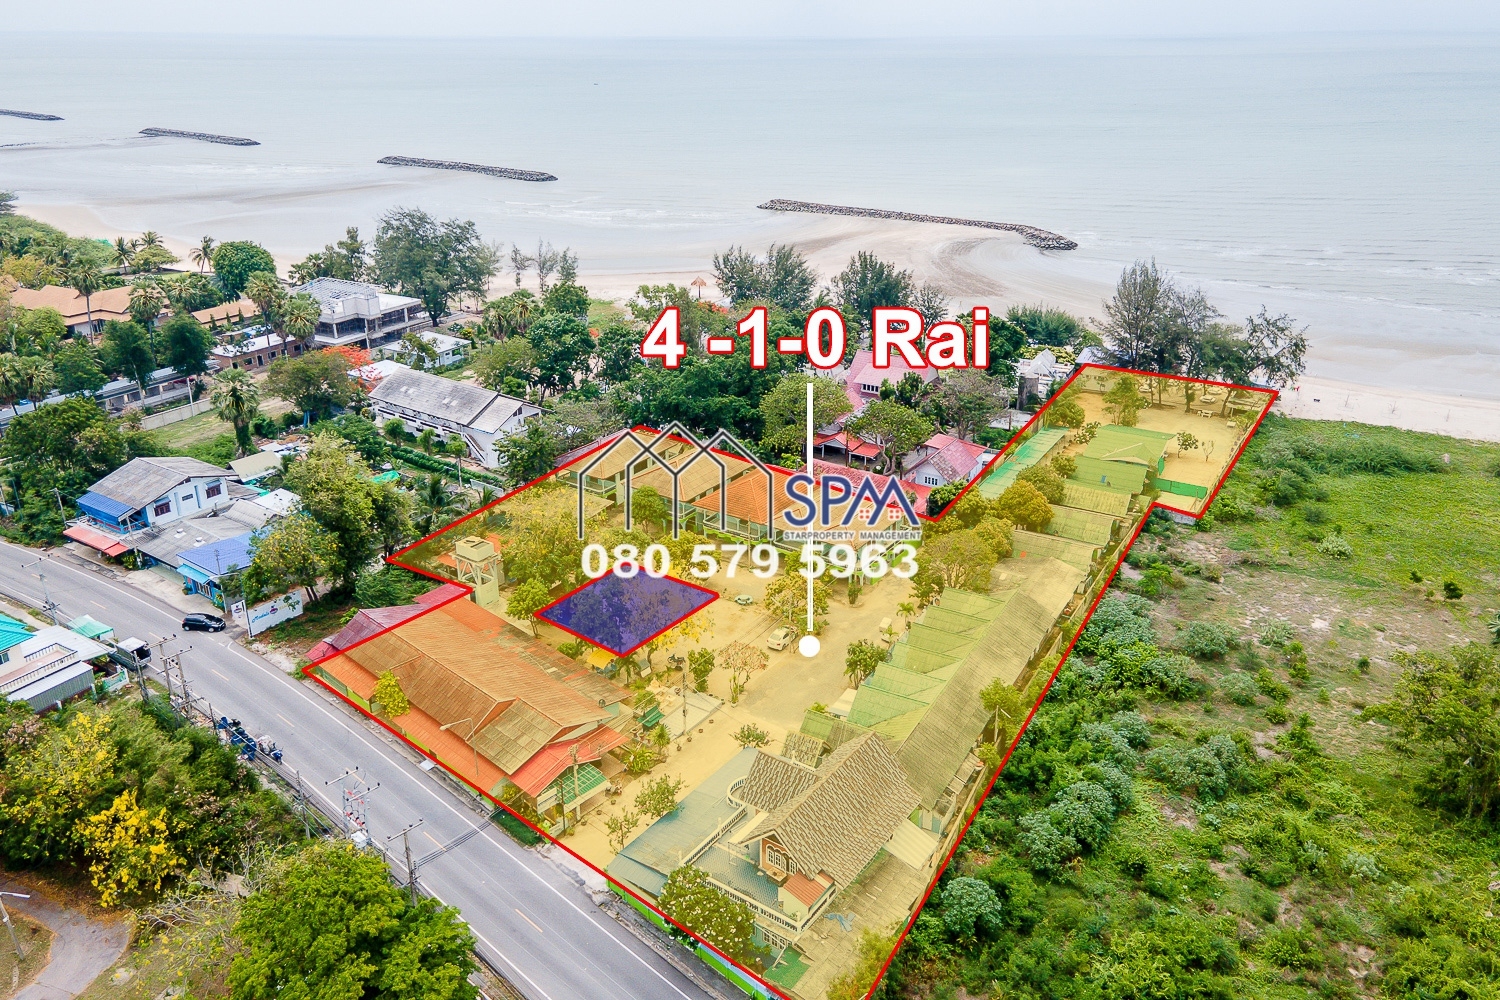 Beach Land for Sale at Sale Haadchaosamran Beach-Cha Am, Land Area 4 Rai 1 Ngan (6800 sqm) with 16 Bungalow, Price 25 Million Baht per Rai, Total price 100 Million Baht